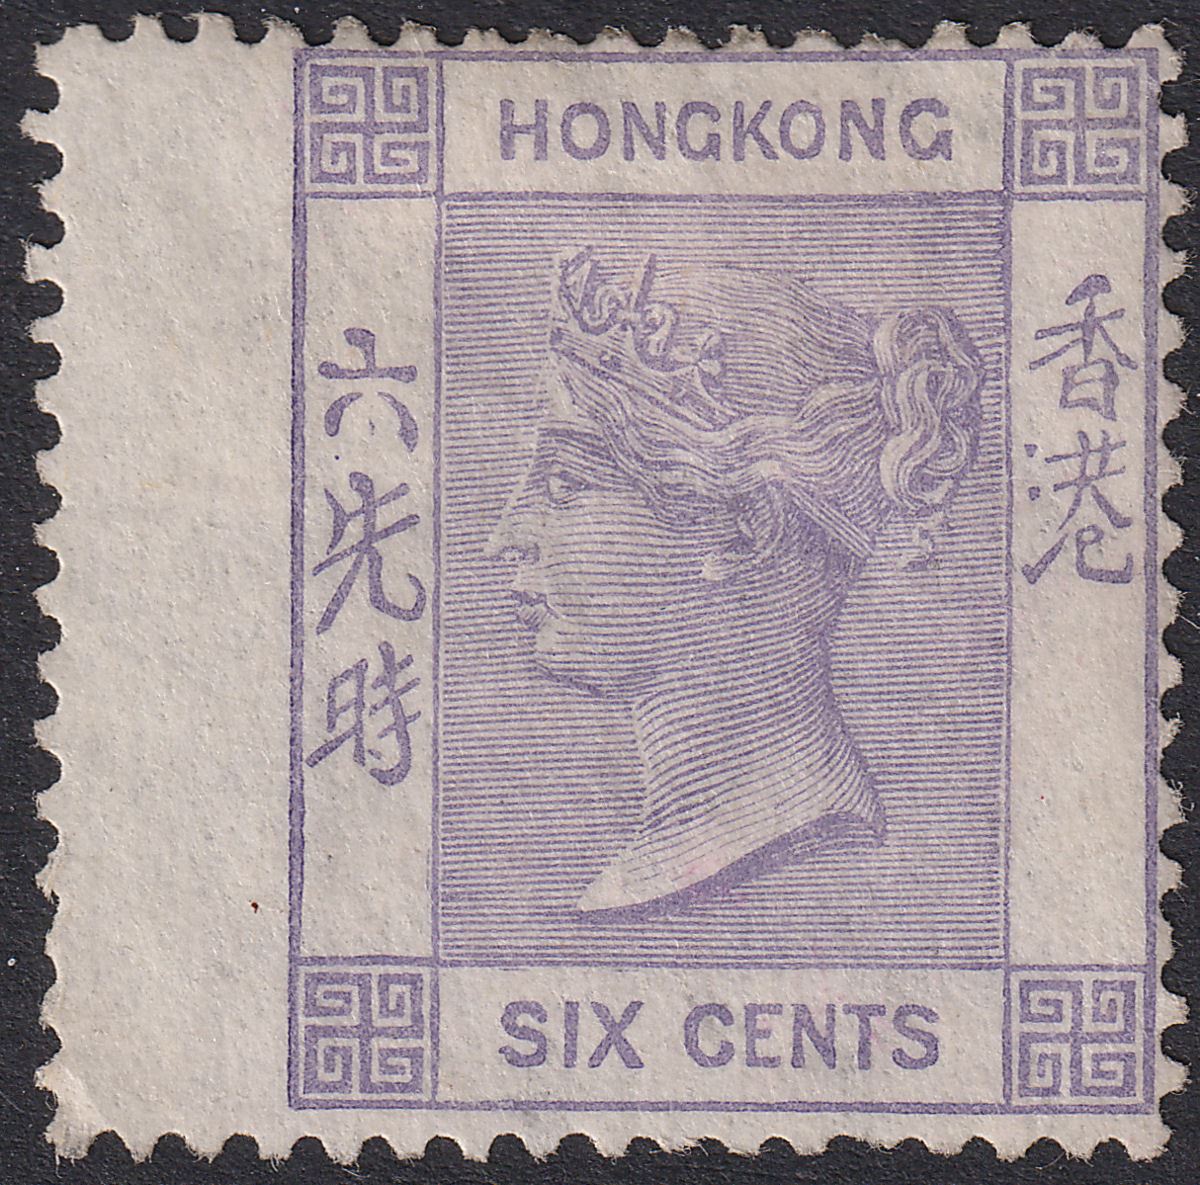 Hong Kong 1863 QV 6c Lilac Unused SG10 cat £450 as mint wing margin w crease